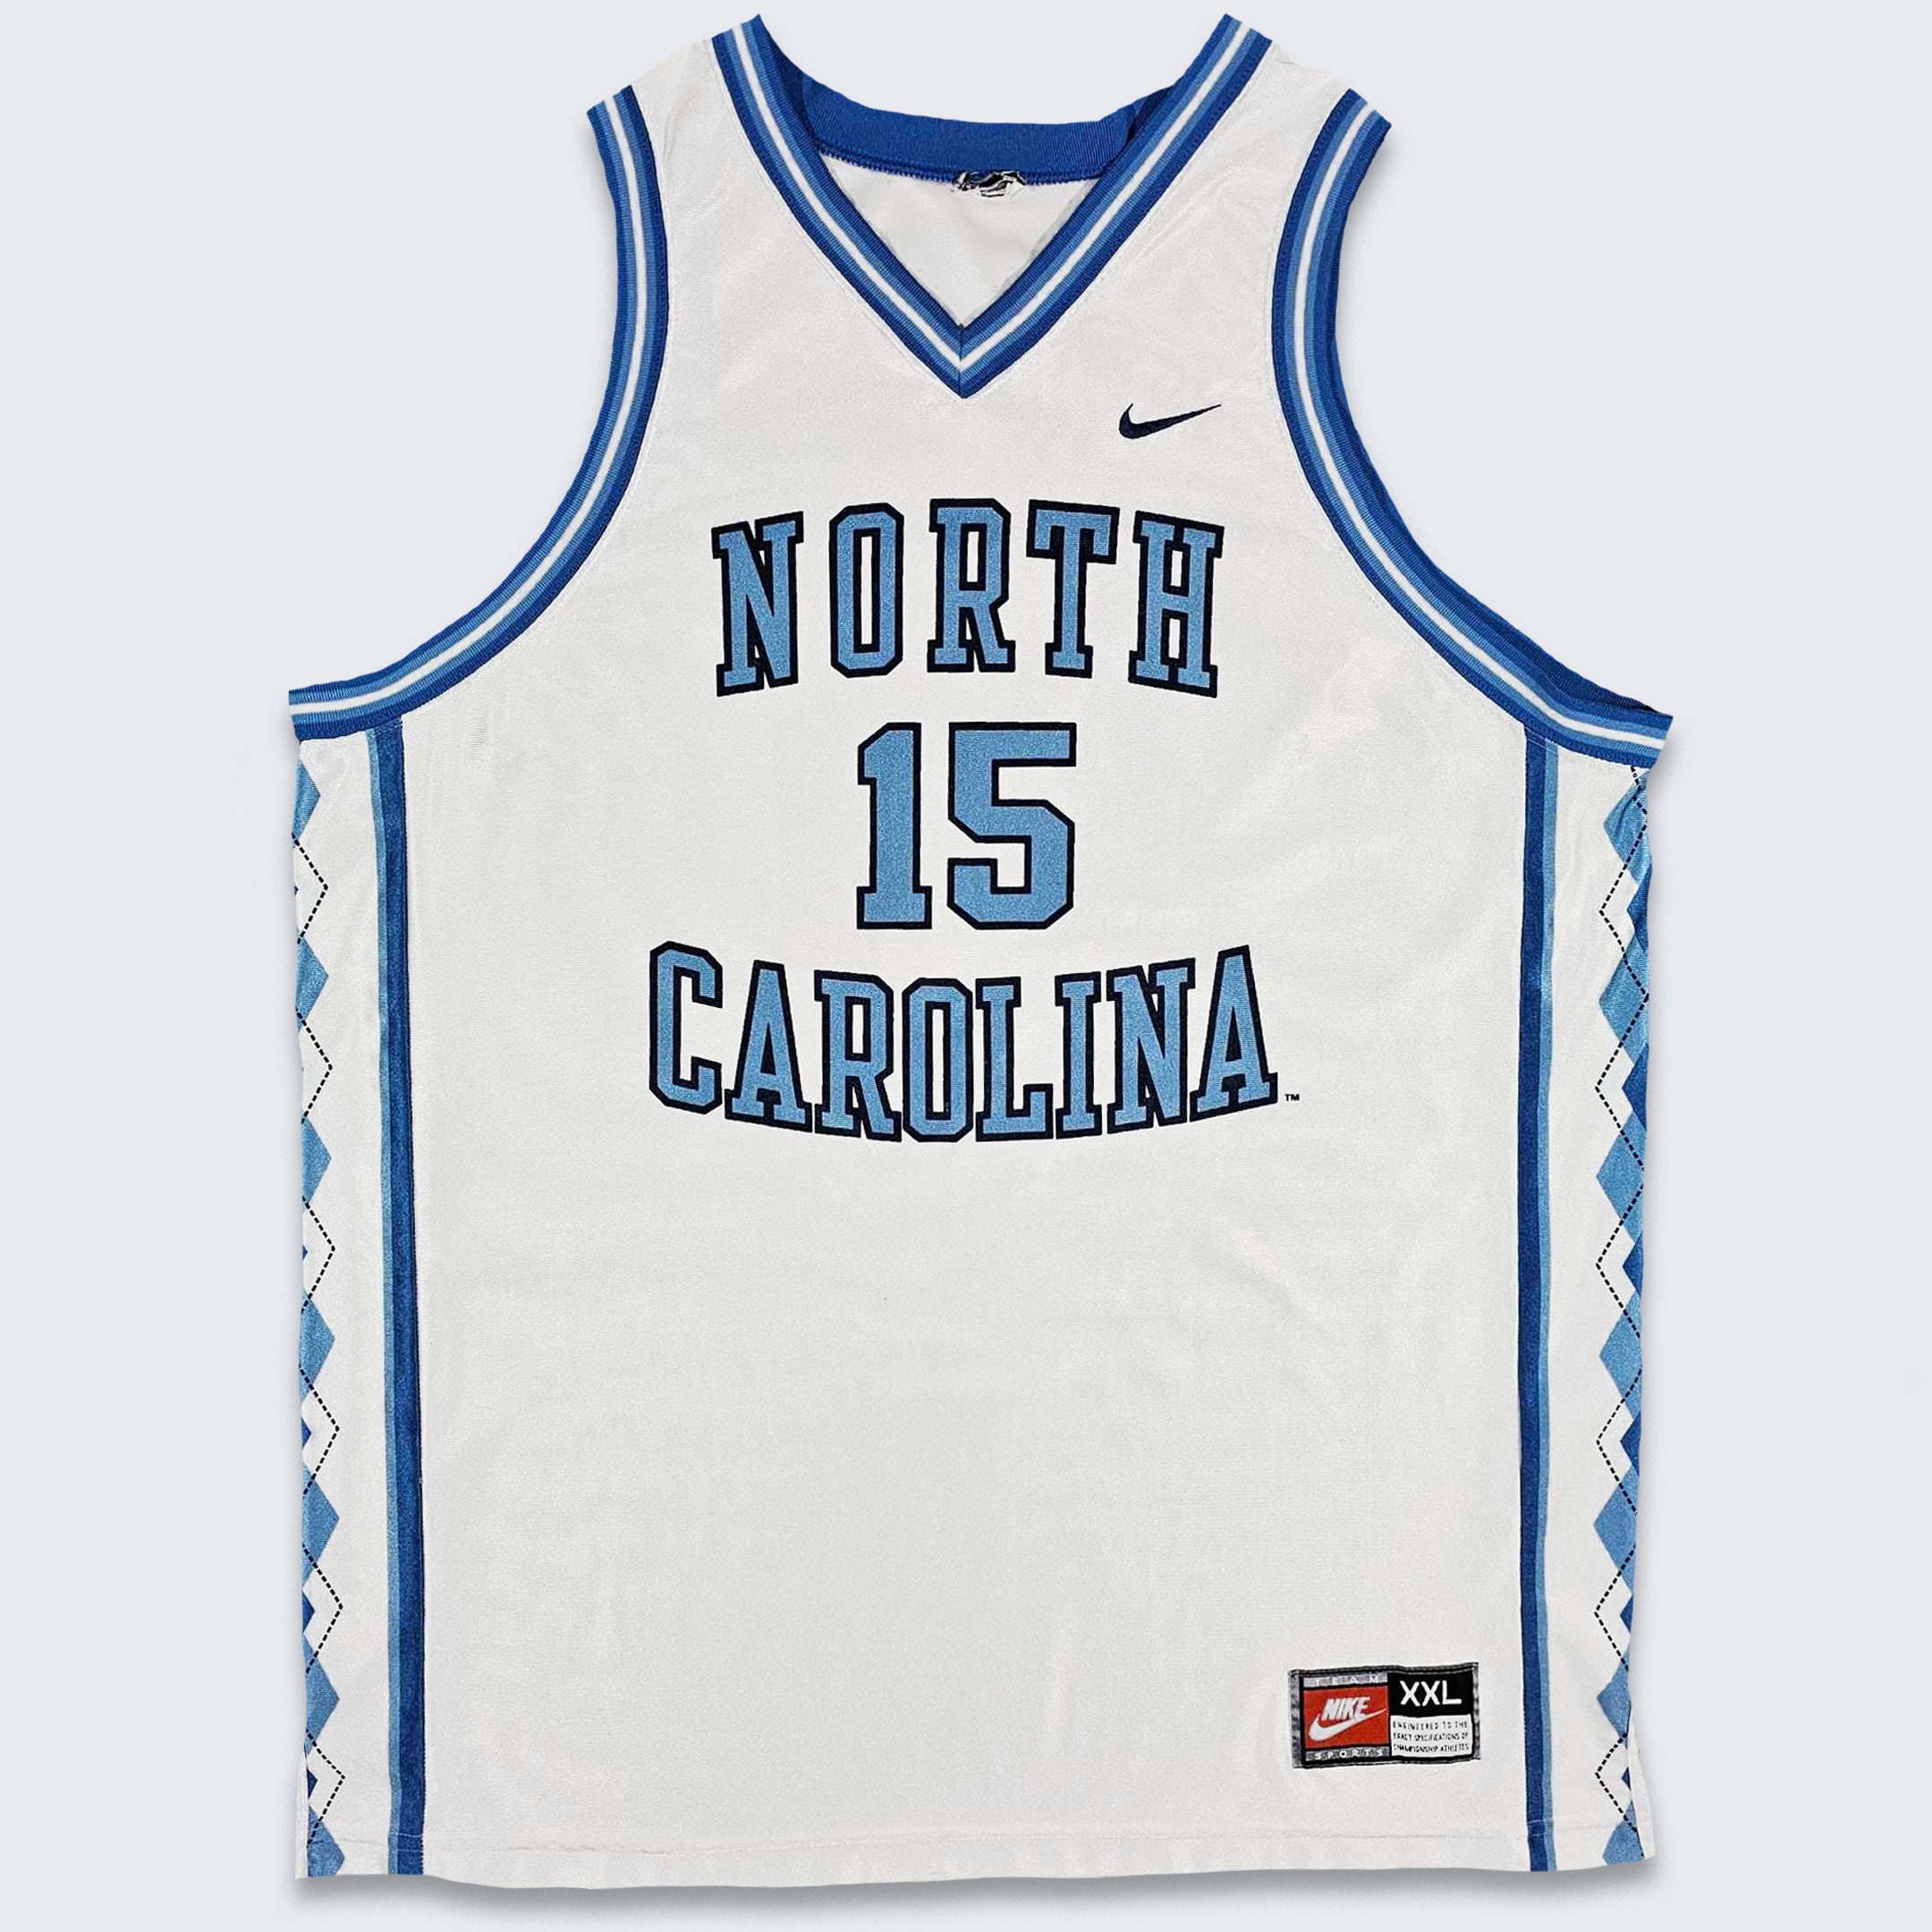 North Carolina Tar Heels Jersey #15 Vince Carter NCAA Basketball Blue